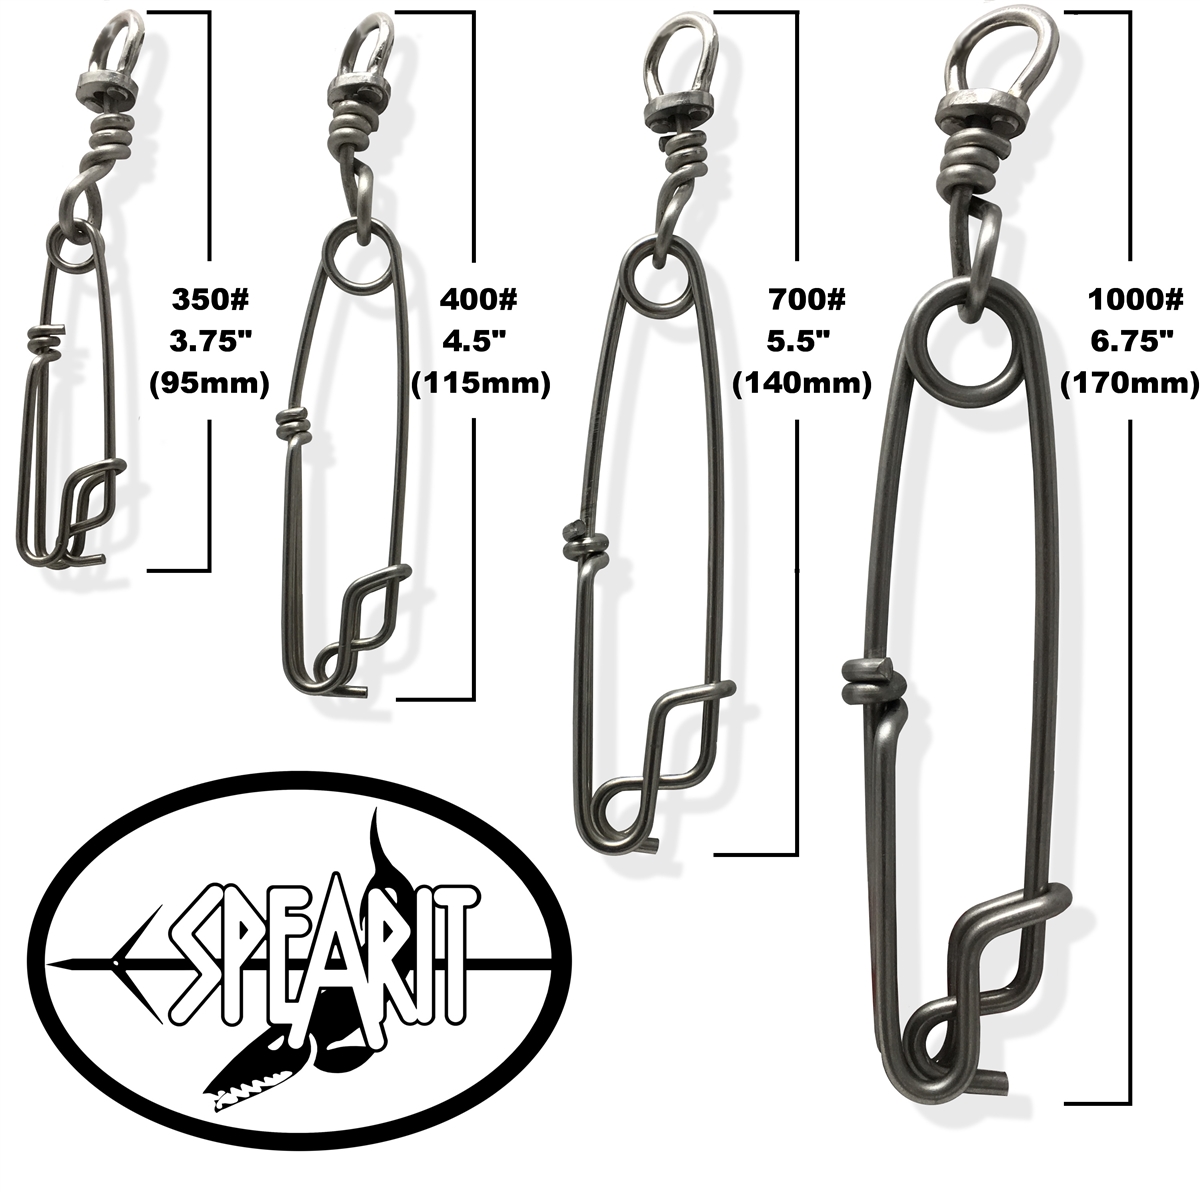 Spearit Stainless Steel Float Line Clip aka branch hanger, tuna clip